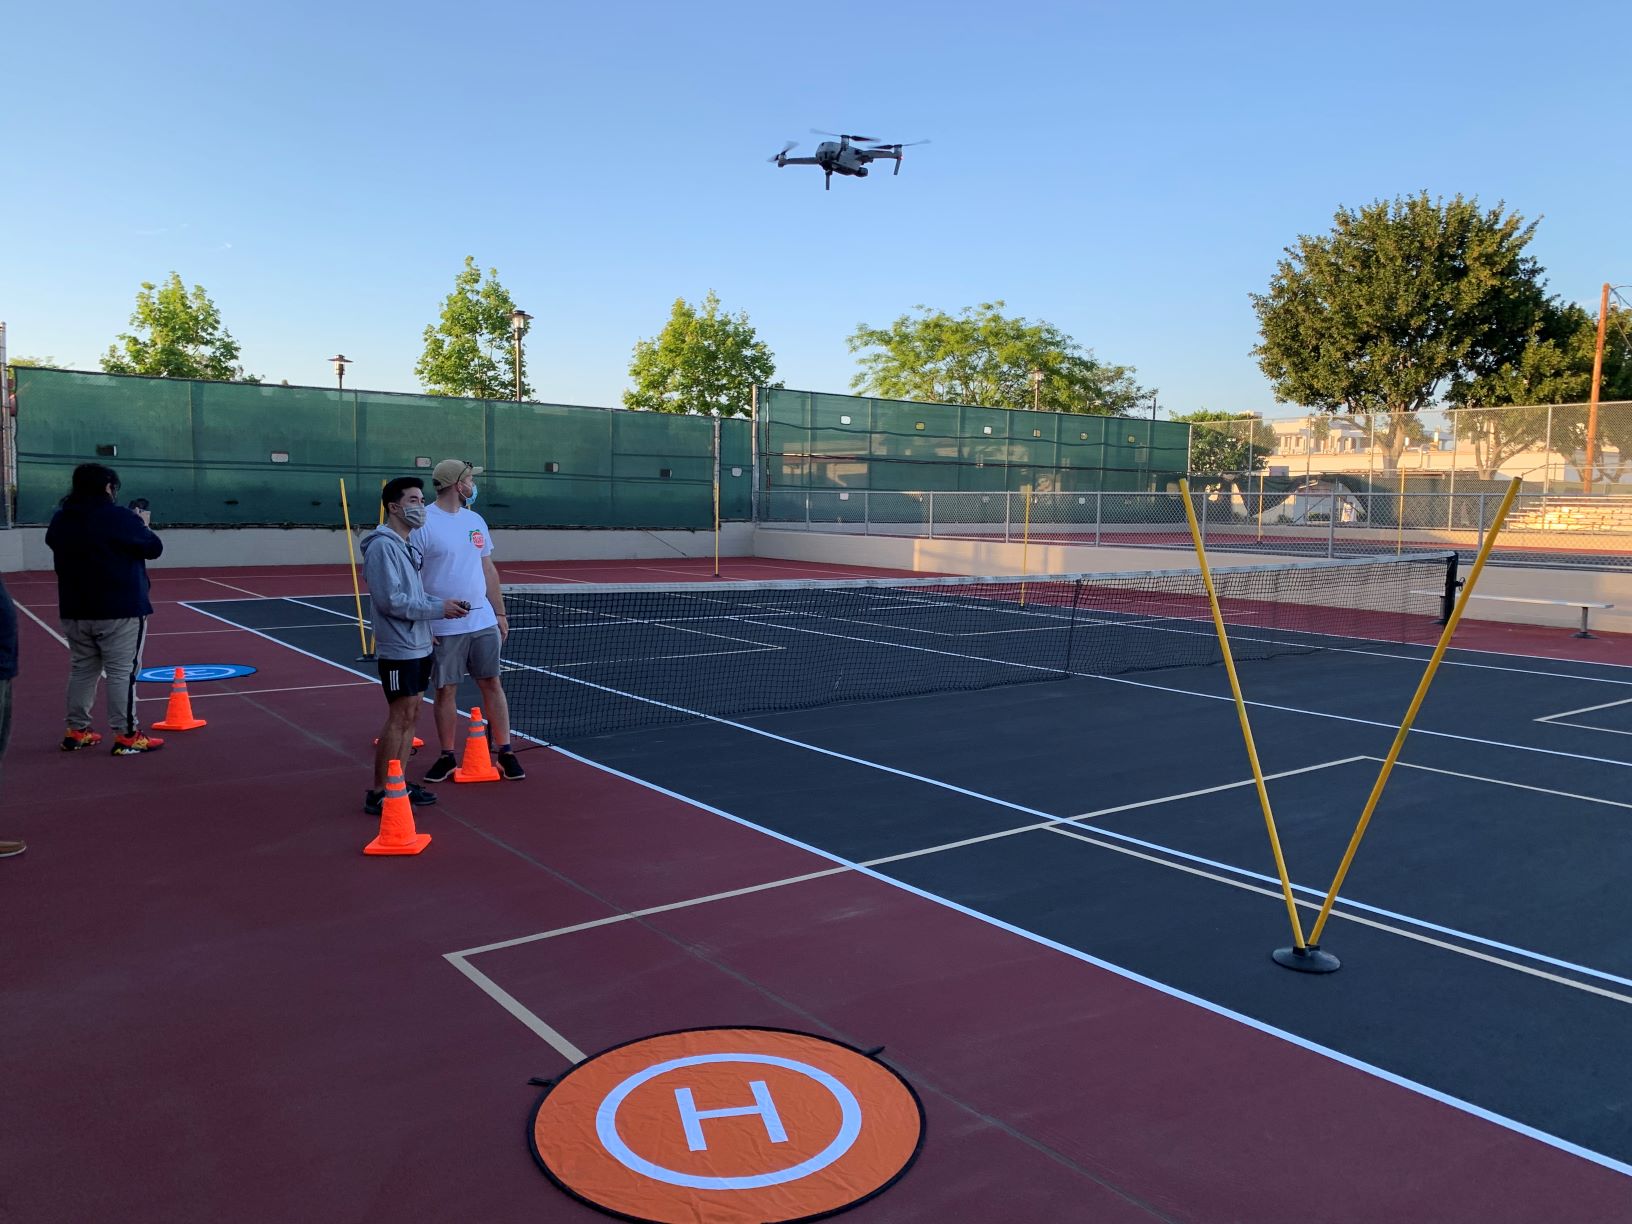 BA 158 Intro to Drones Class